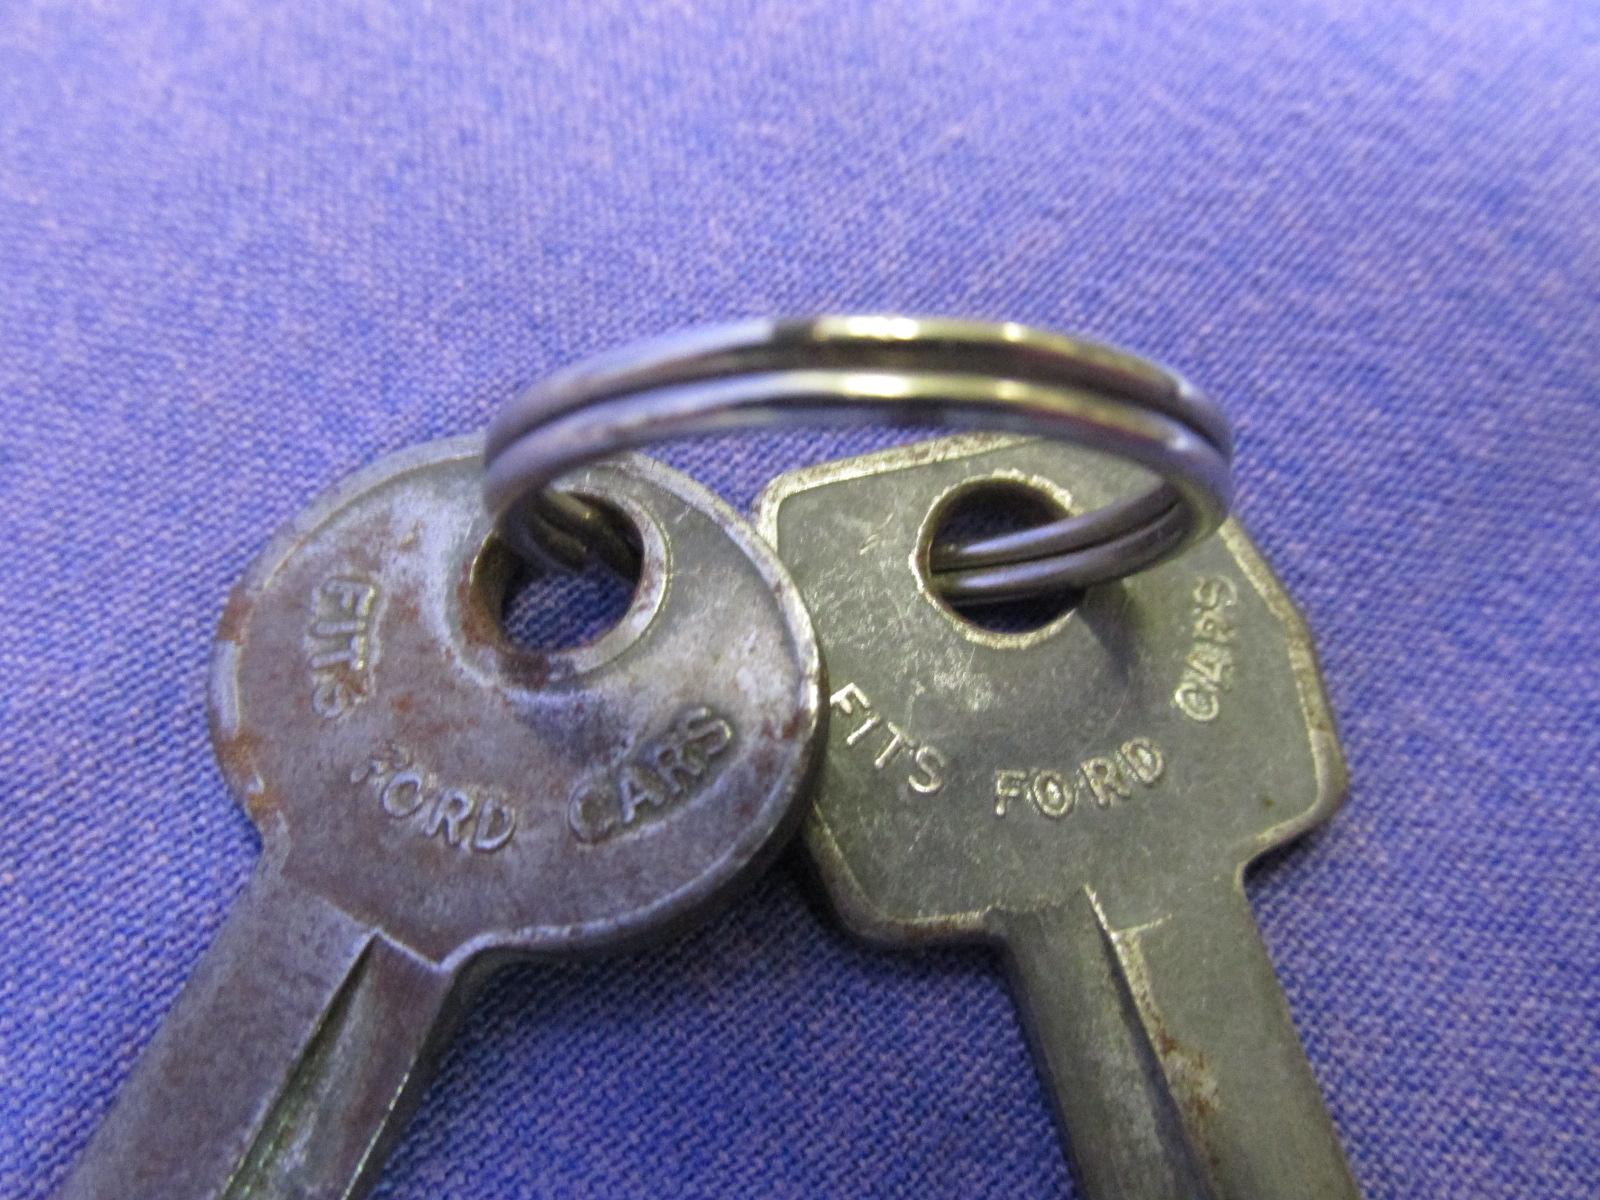 Wood Box full of various household keys & 2 padlocks – 1 Key says Ford Mustang